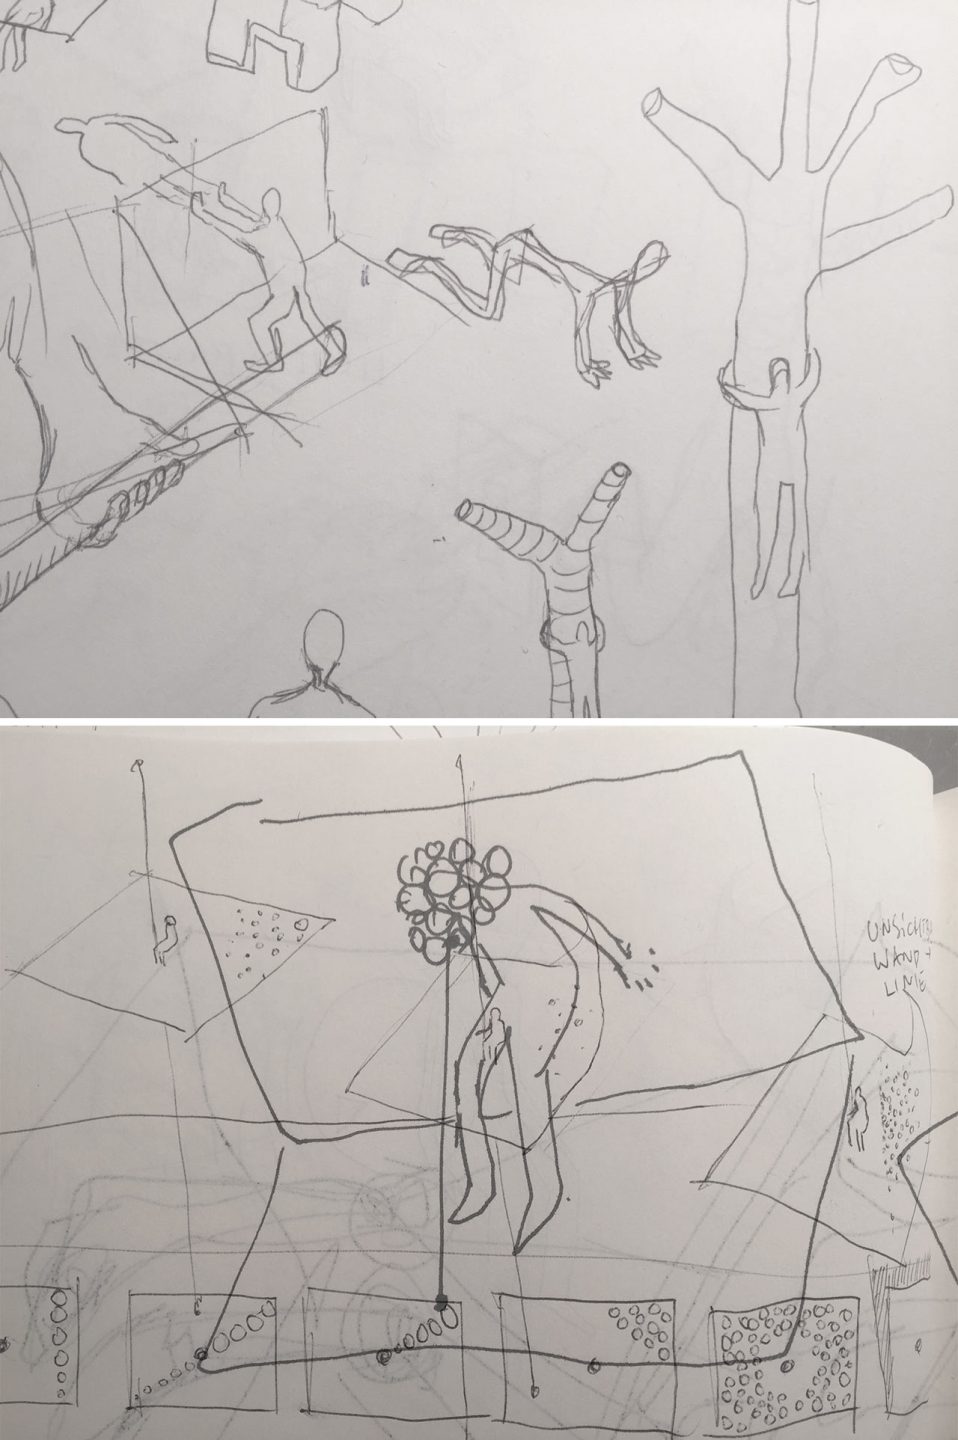 Fragstein’s concept sketches for "Dagner."